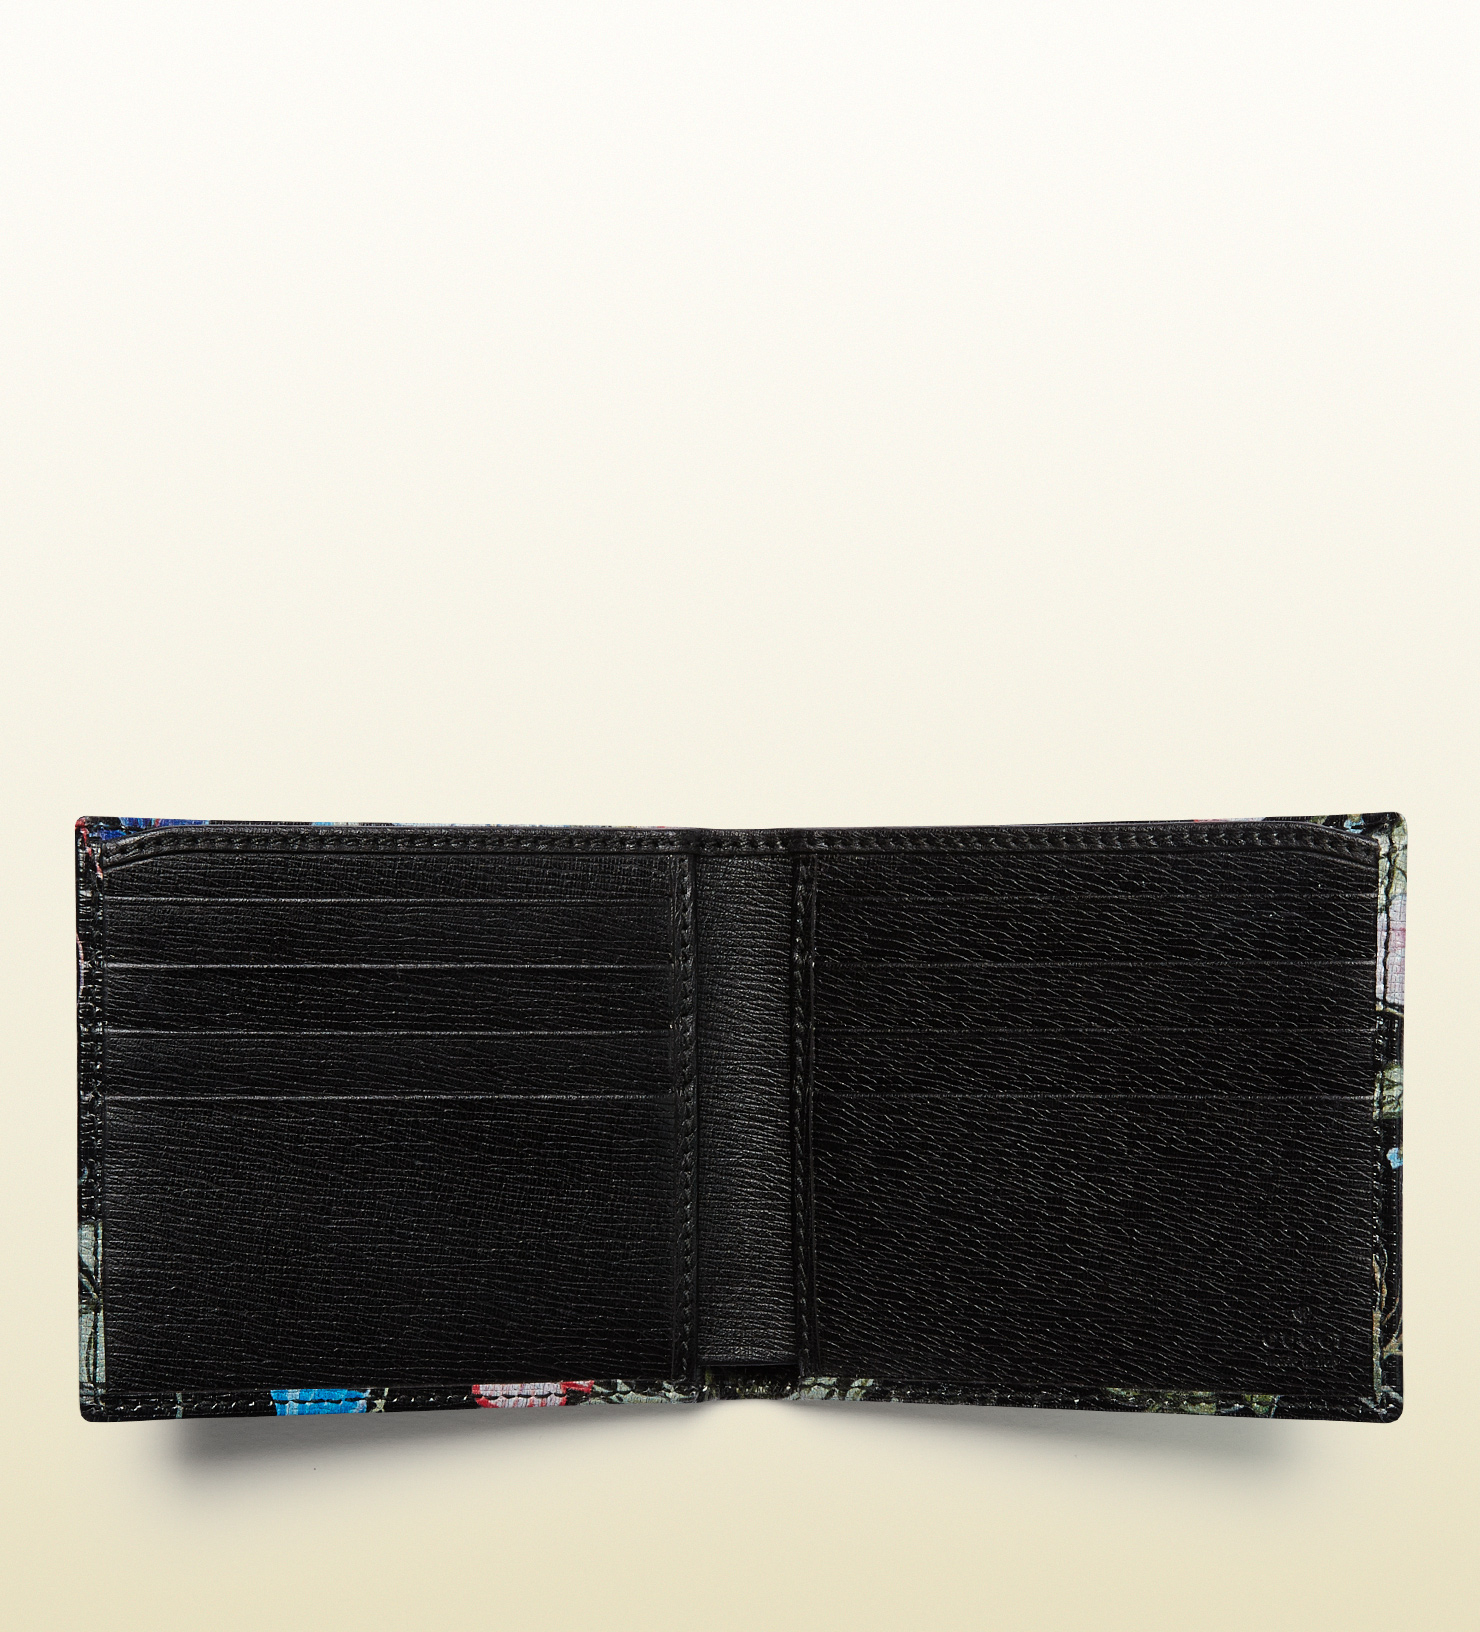 Lyst - Gucci Flora Knight Leather Bi-fold Wallet for Men